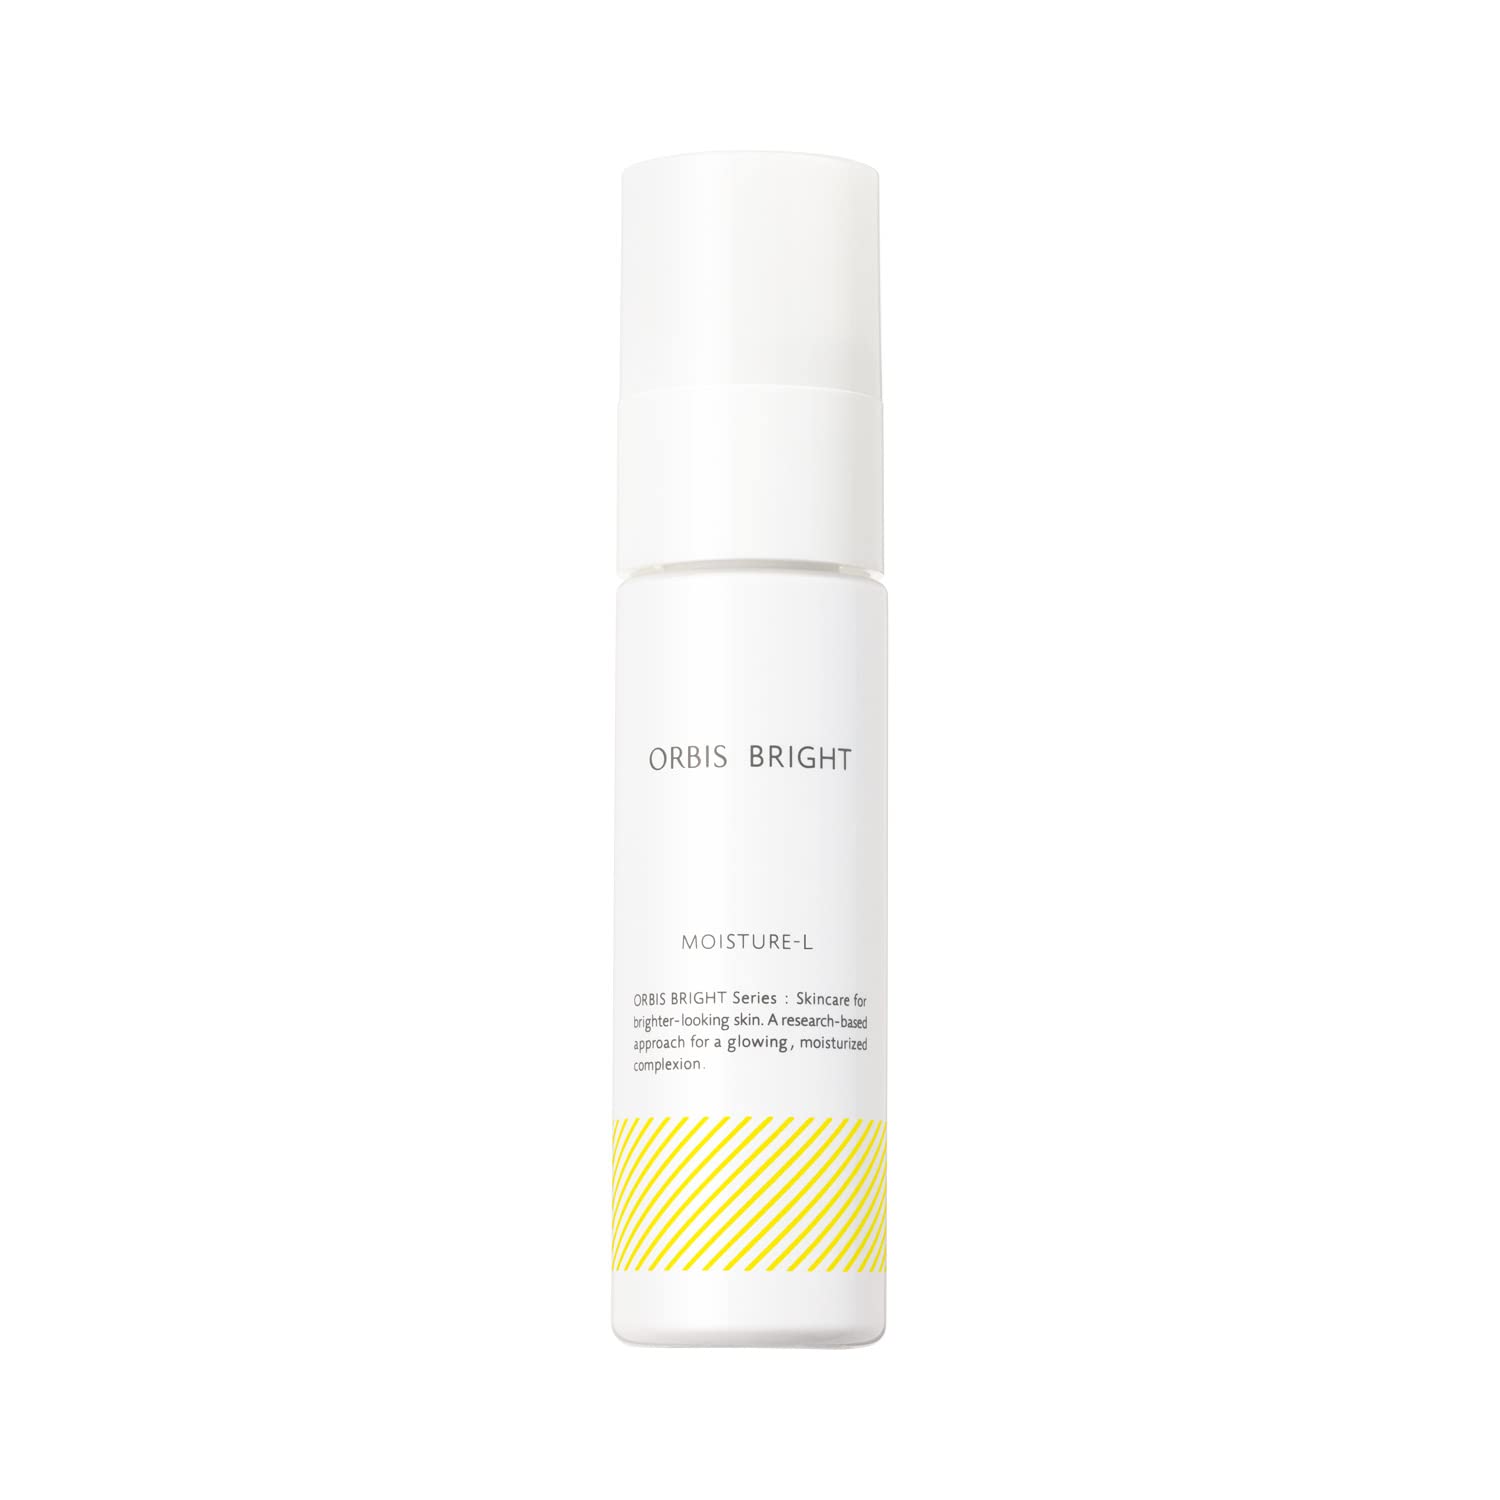 Orbis Bright Moisture 50ml: Refreshing Whitening Moisturizing Liquid for Skin Care